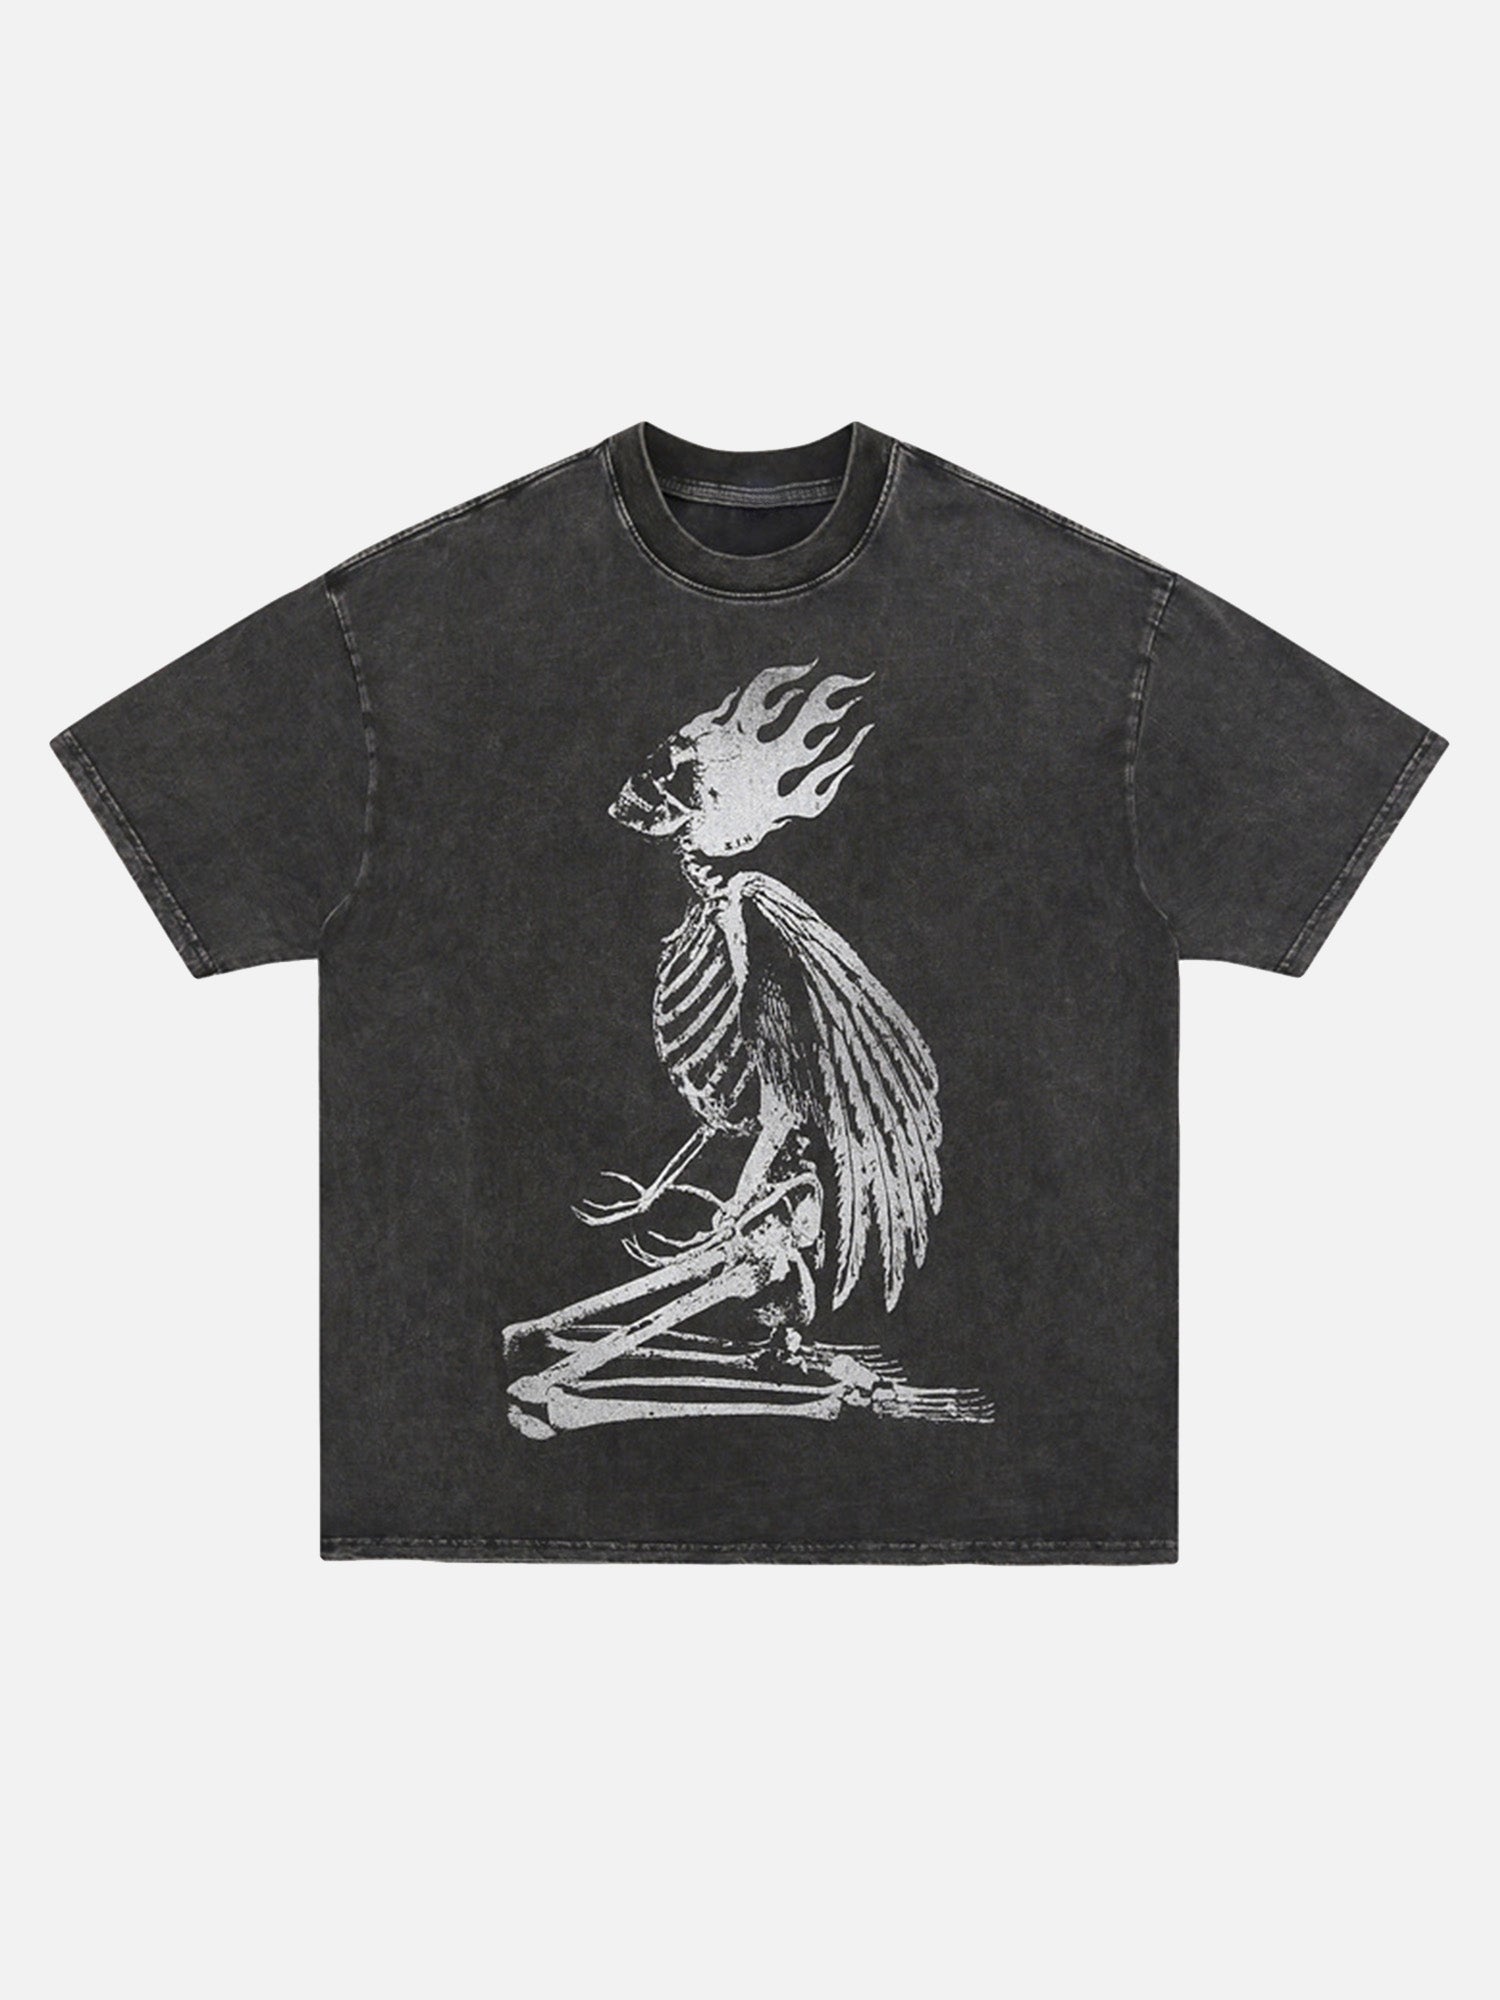 West Coast Retro Dark Skeleton Hip Hop Loose Street T-shirt